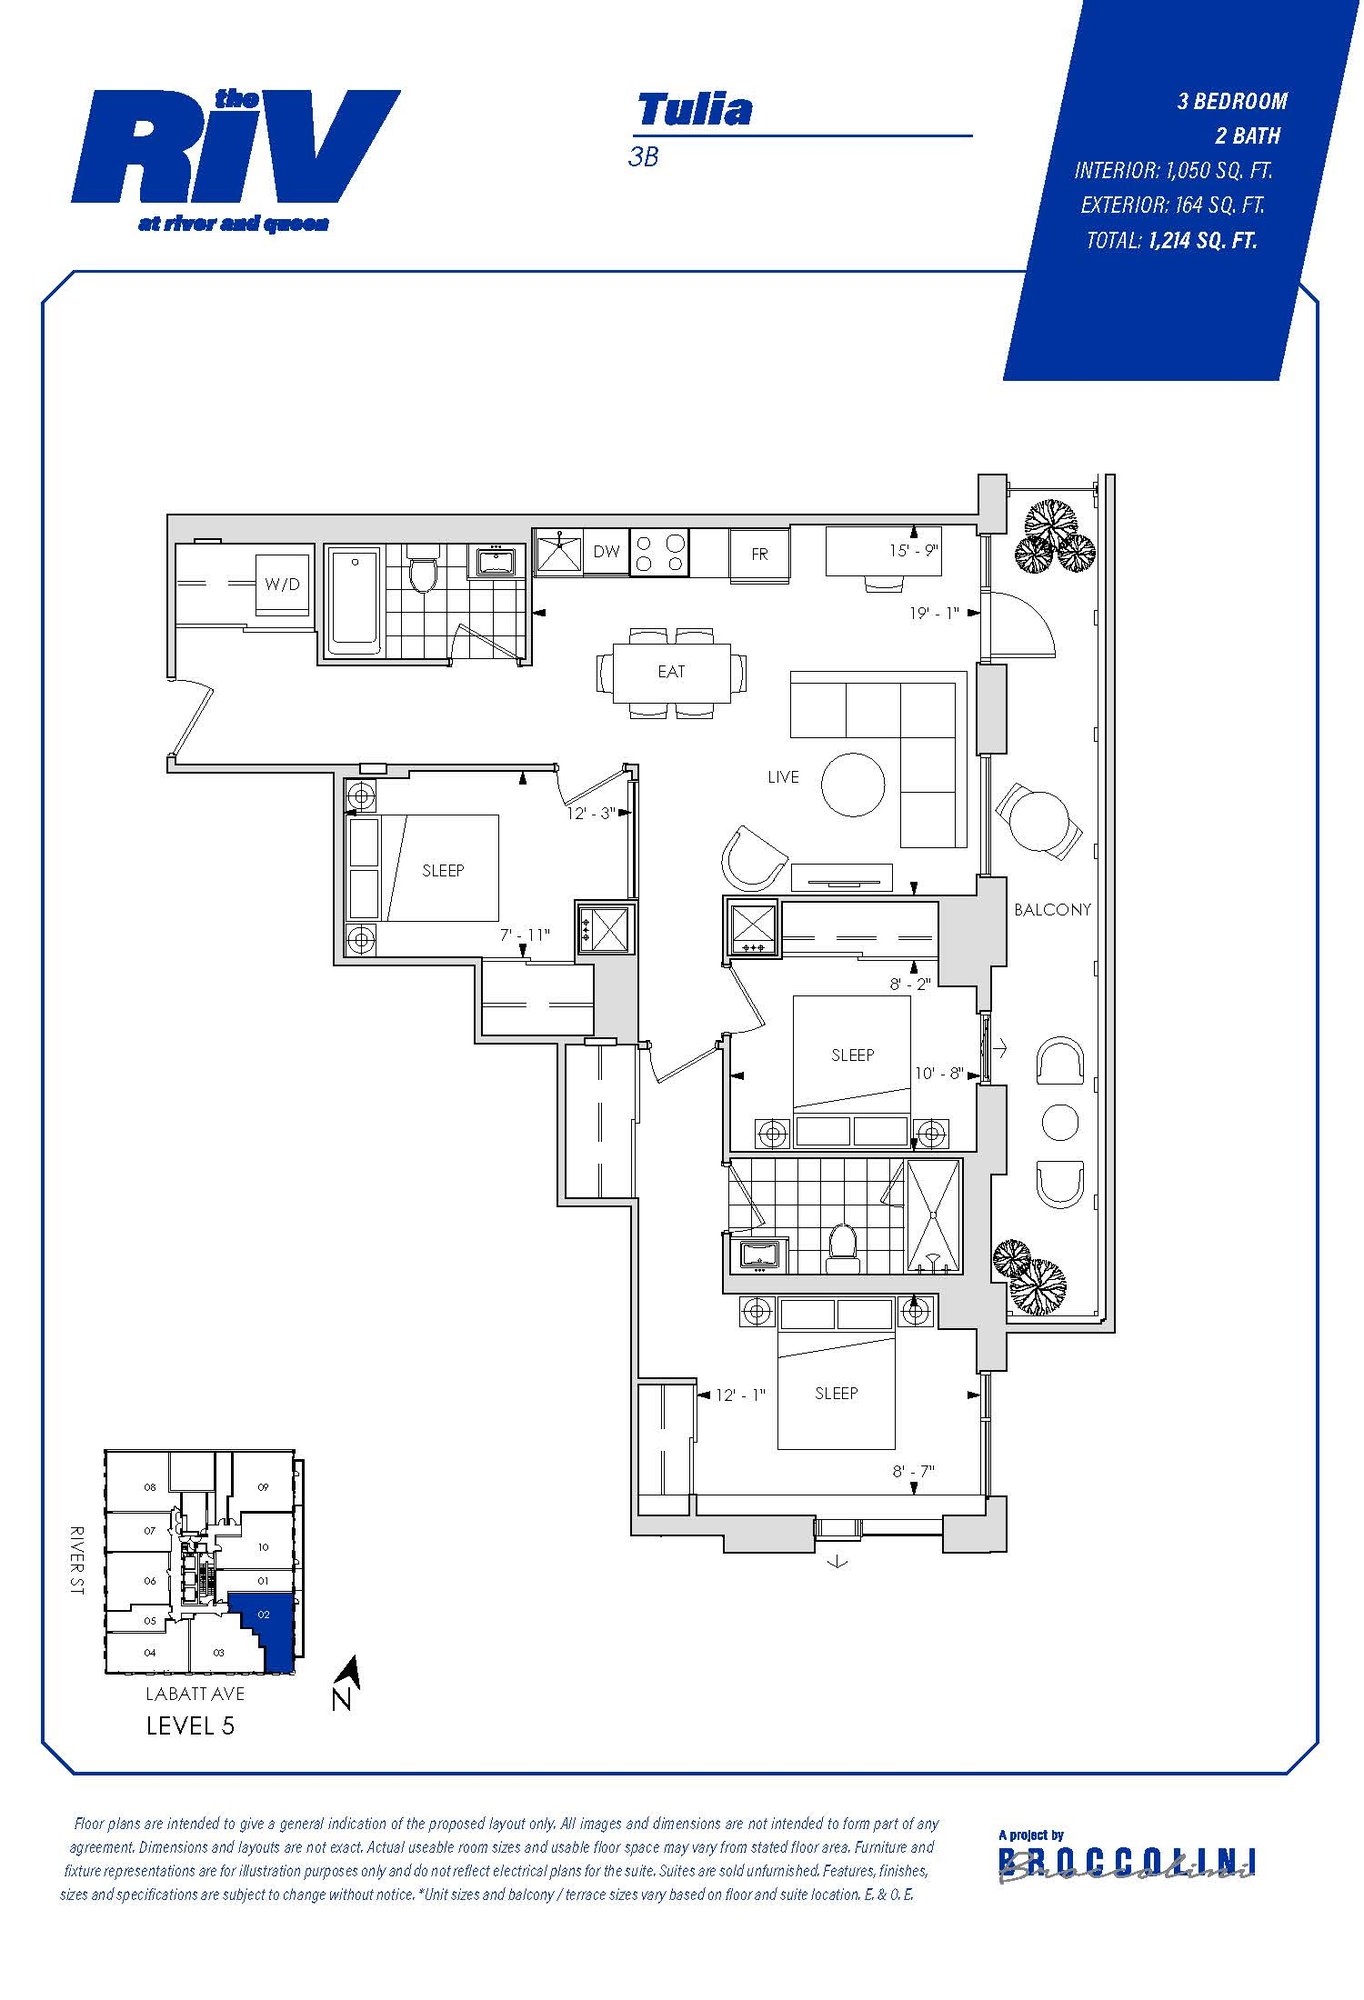 Floor plan for Tulia three bedroom unit in The Riv